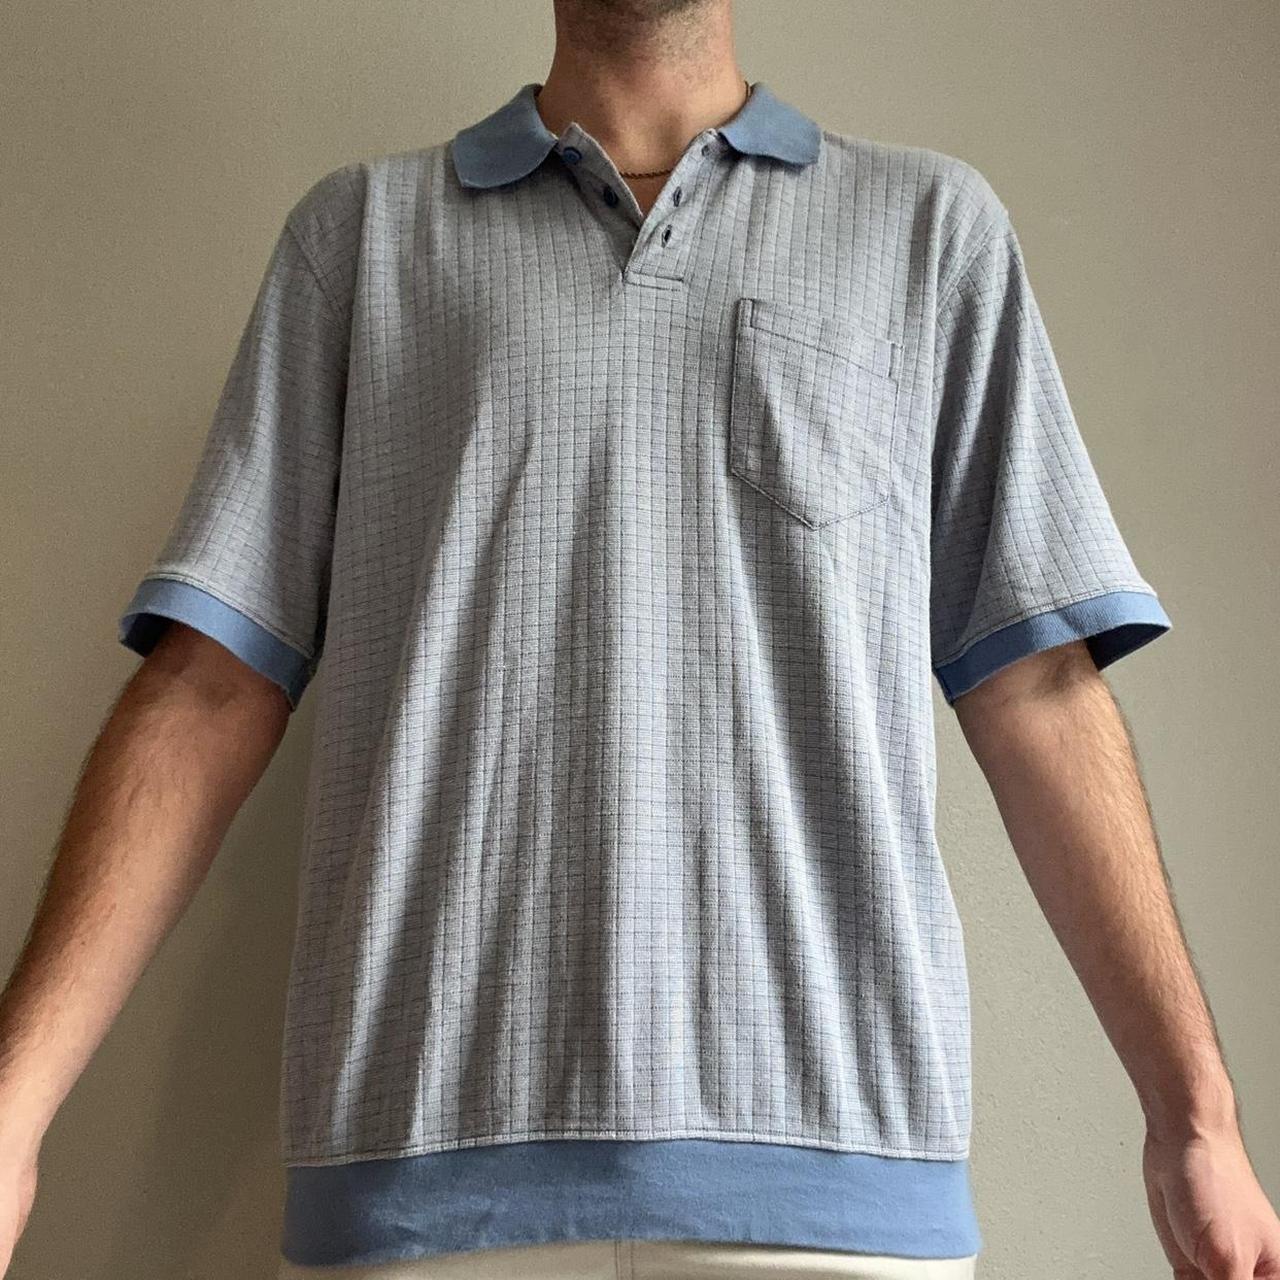 Men's No Polo Short Sleeve Banded-Bottom Shirt